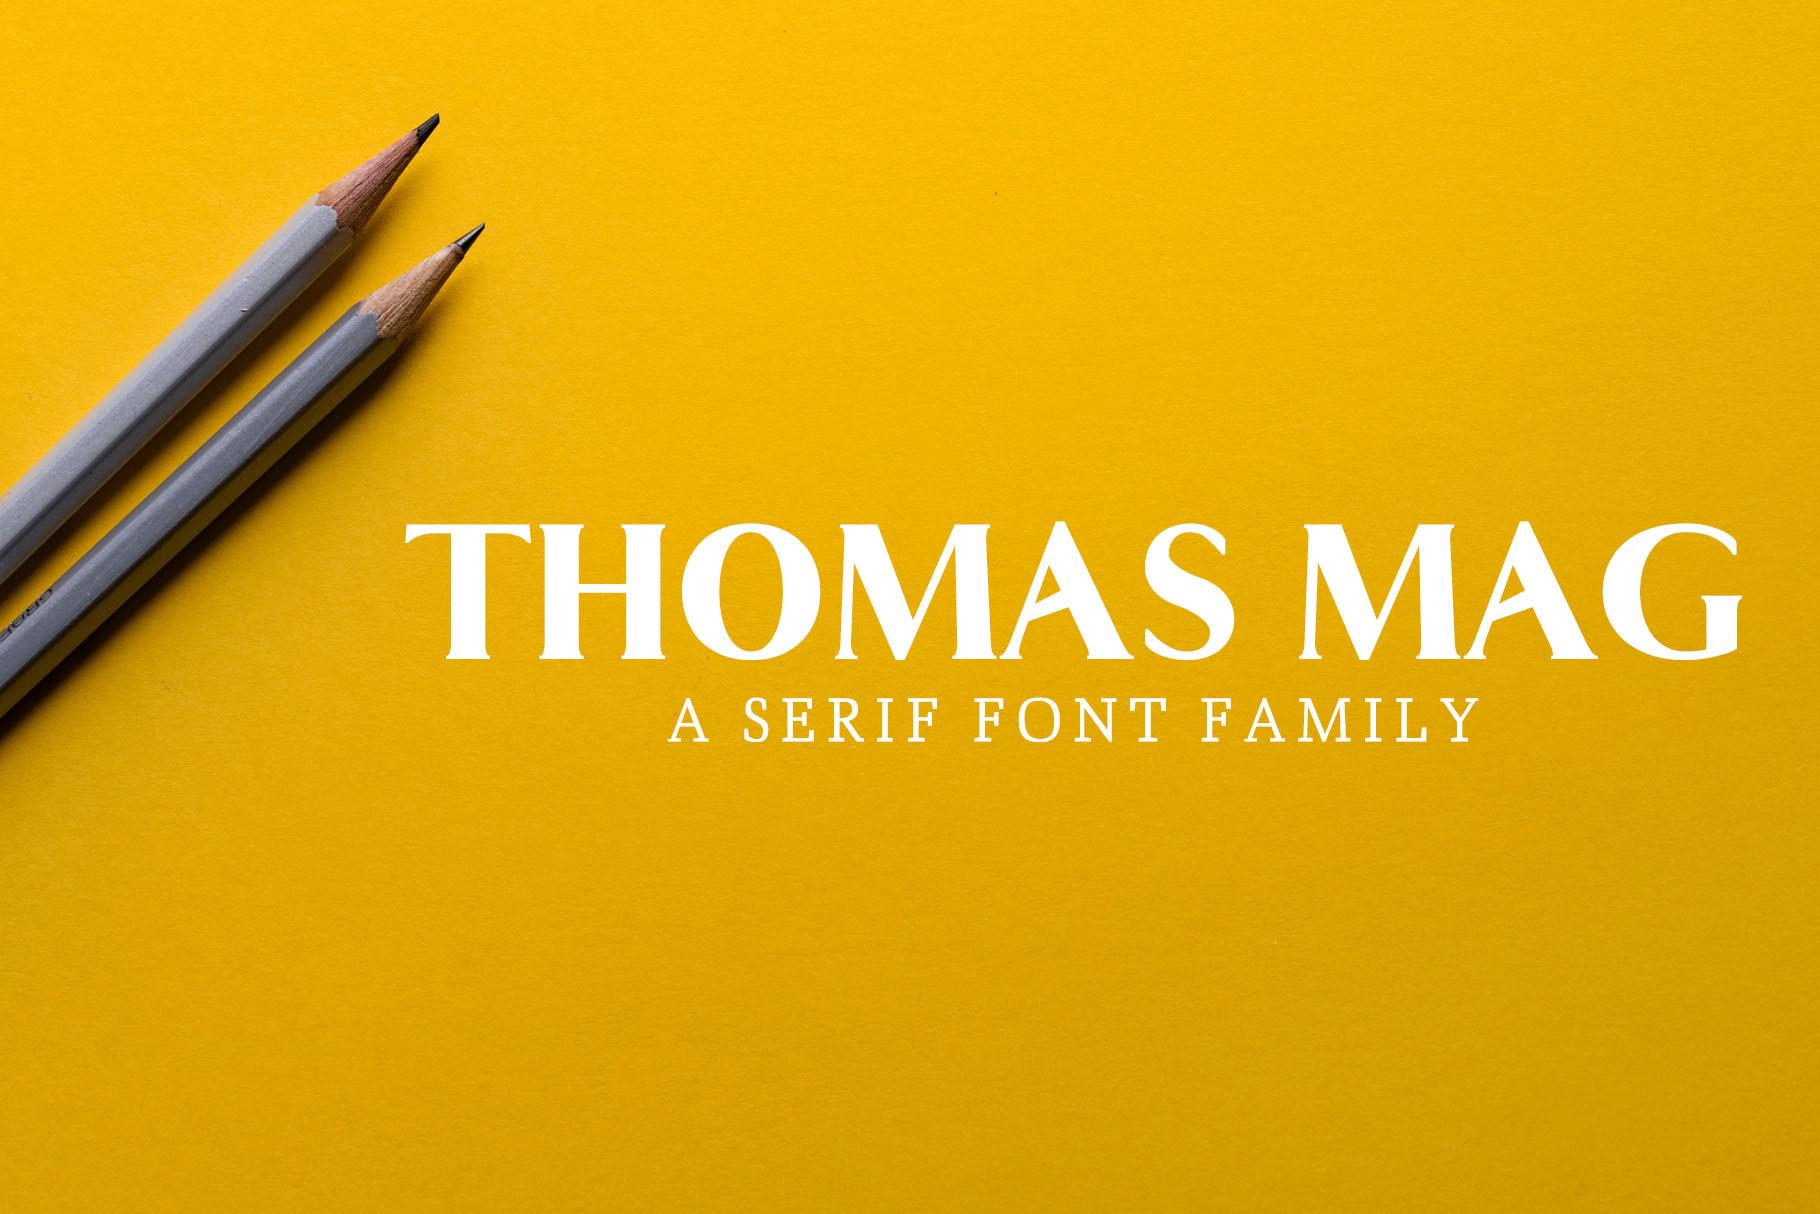 Thomas Mag Family Font